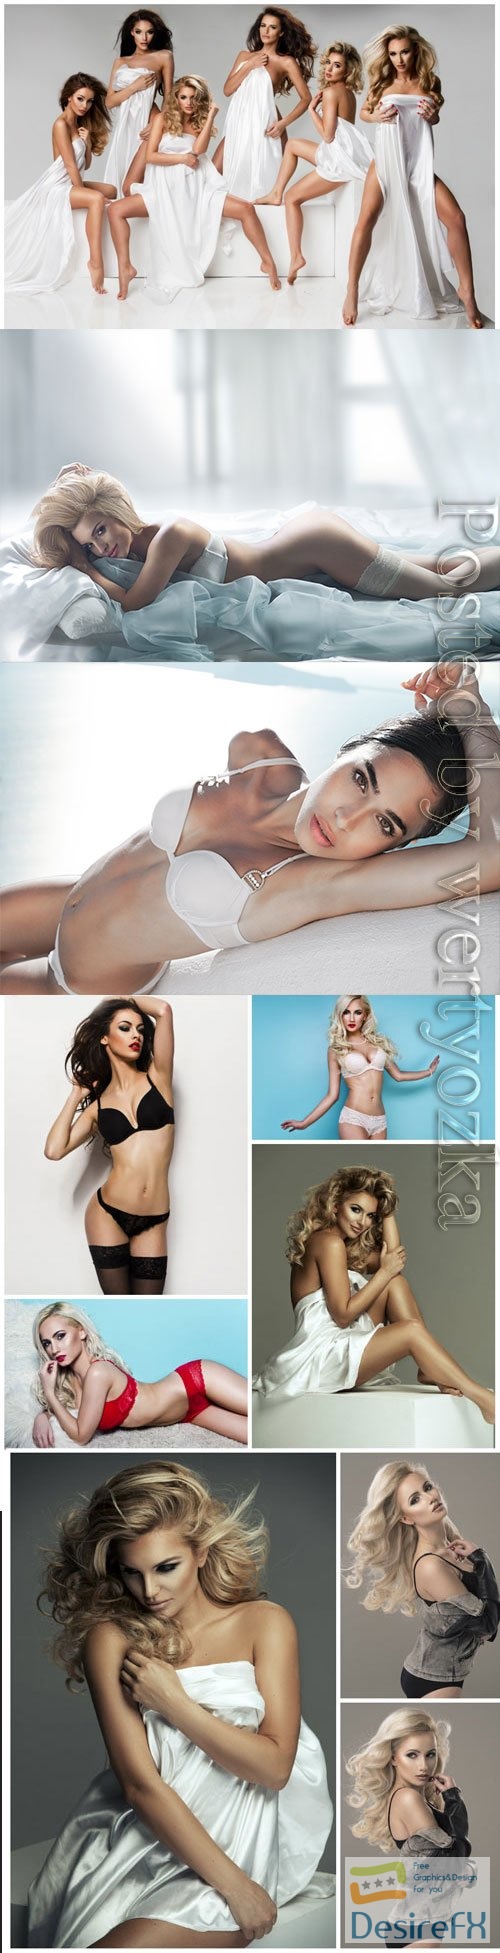 Luxury women in lingerie posing stock photo vol 4